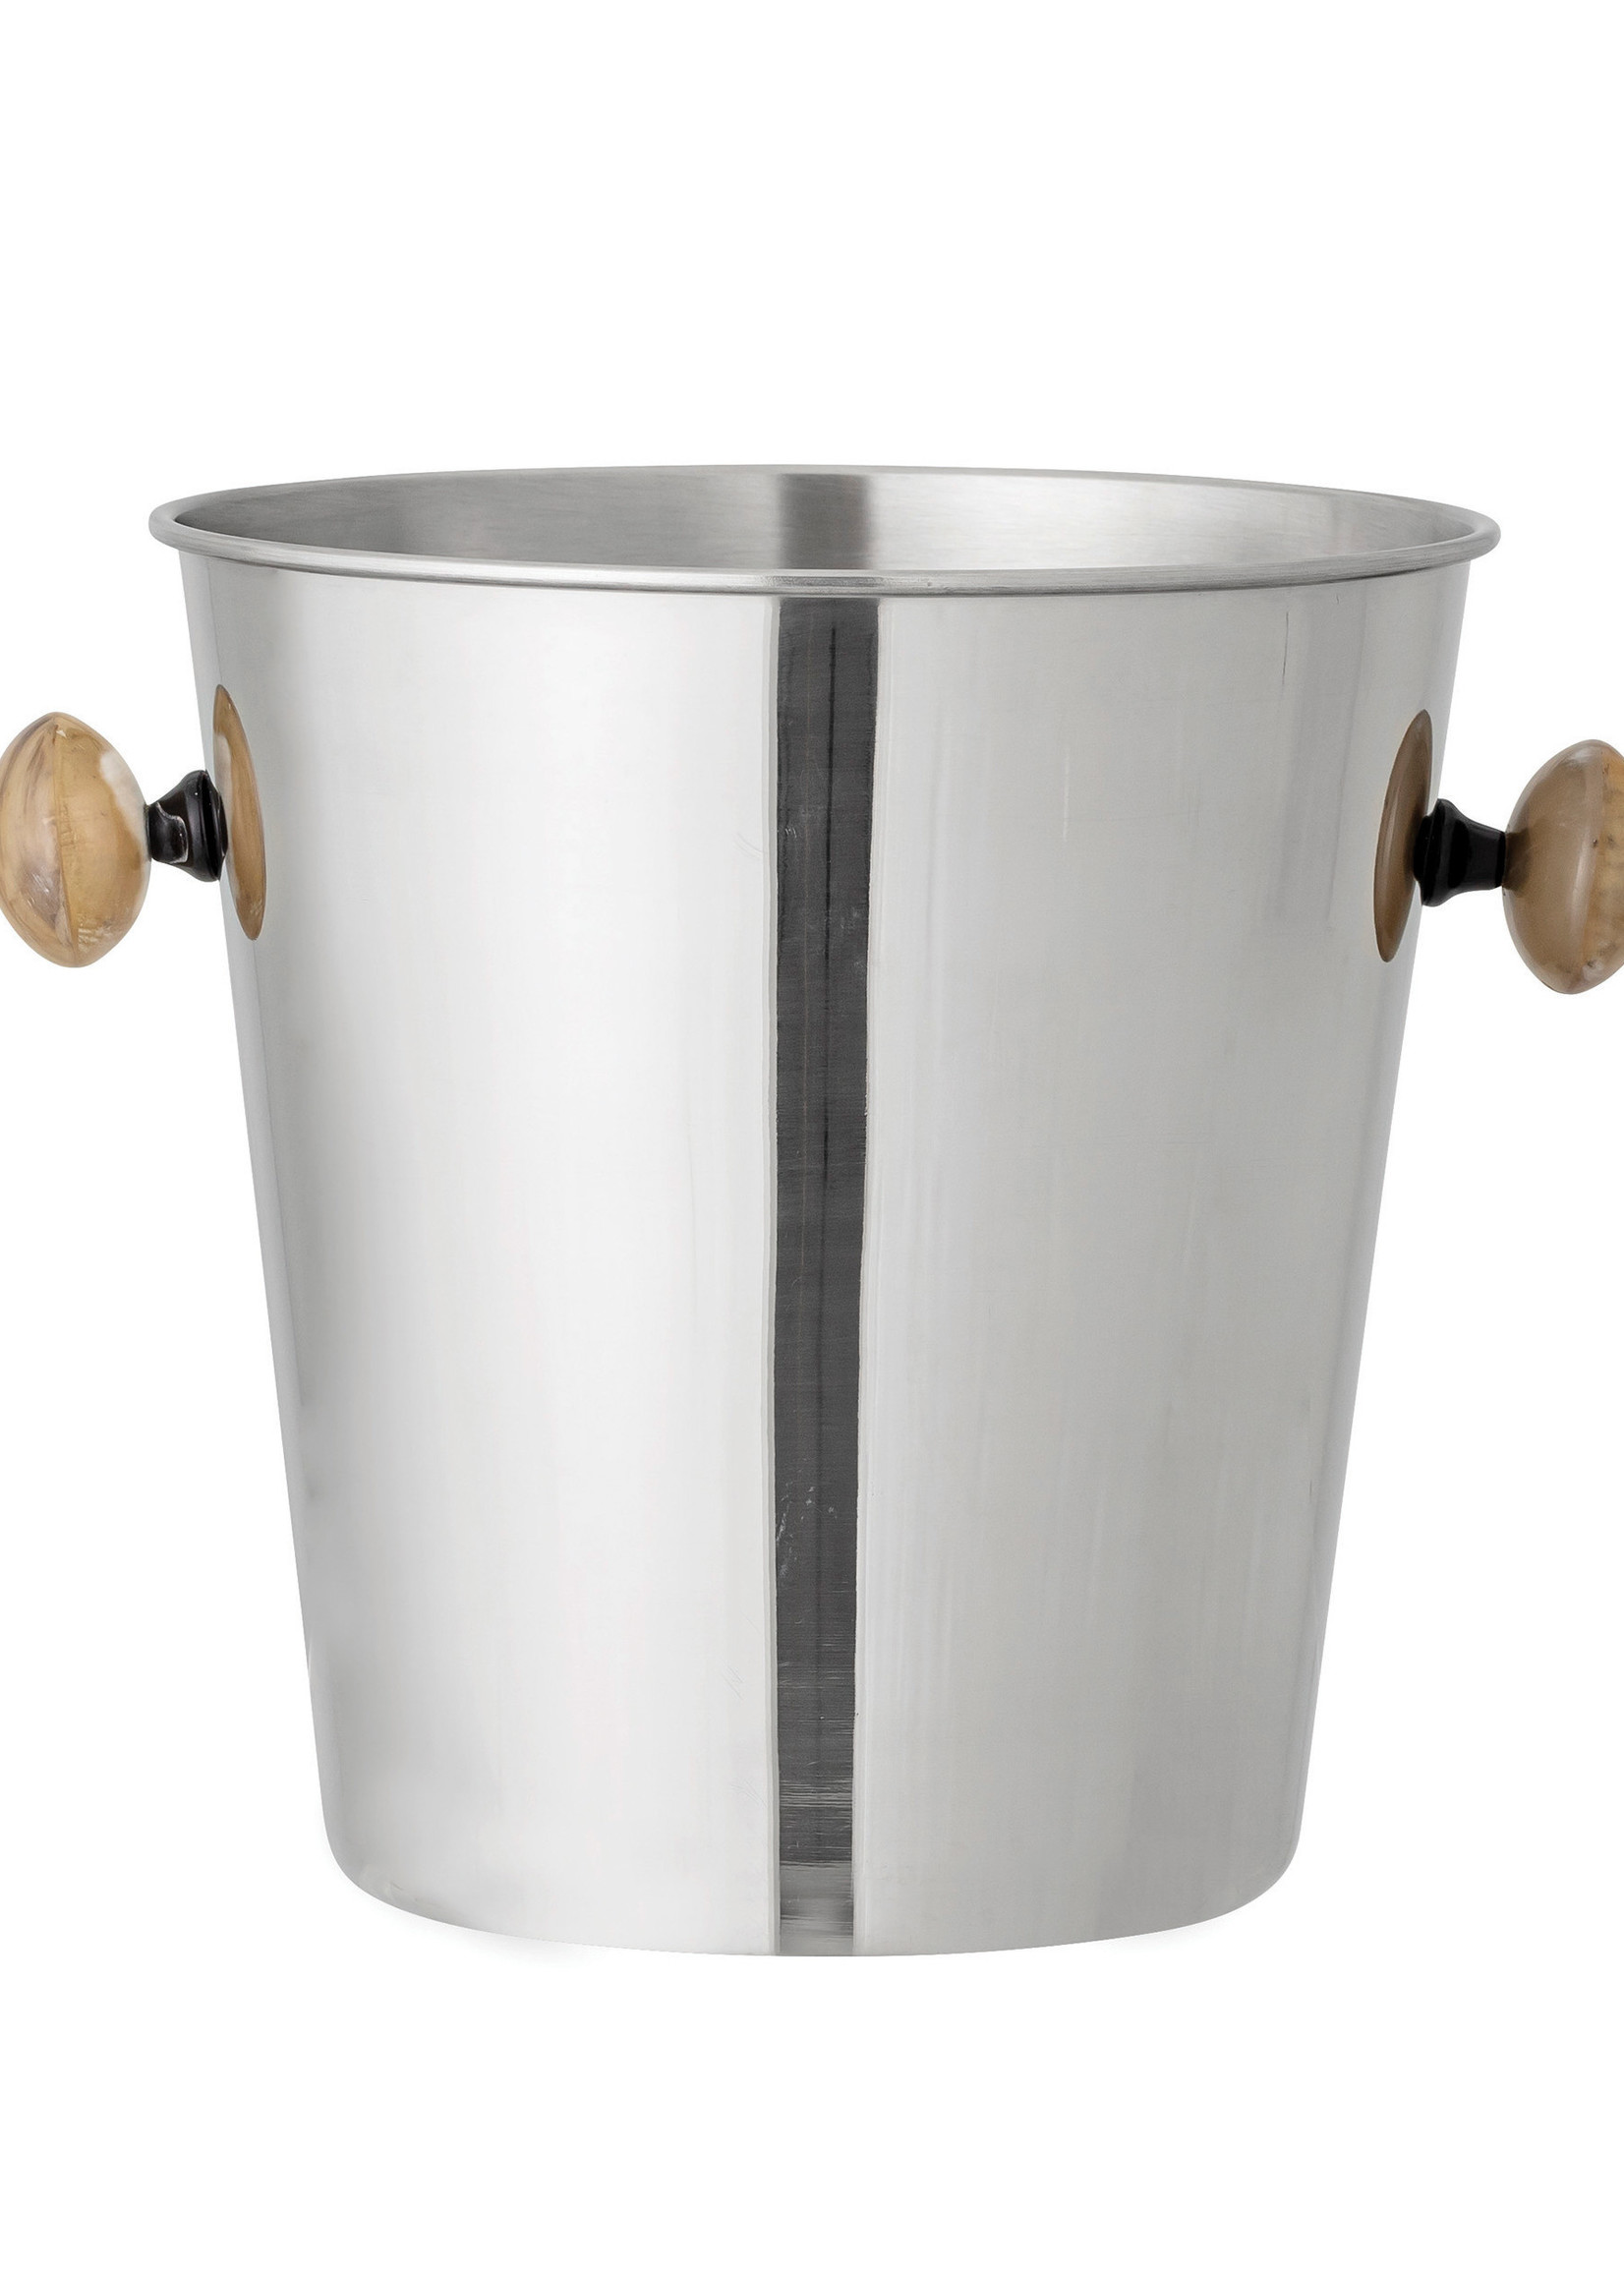 Bloomingville Ice Bucket with Horn Handles